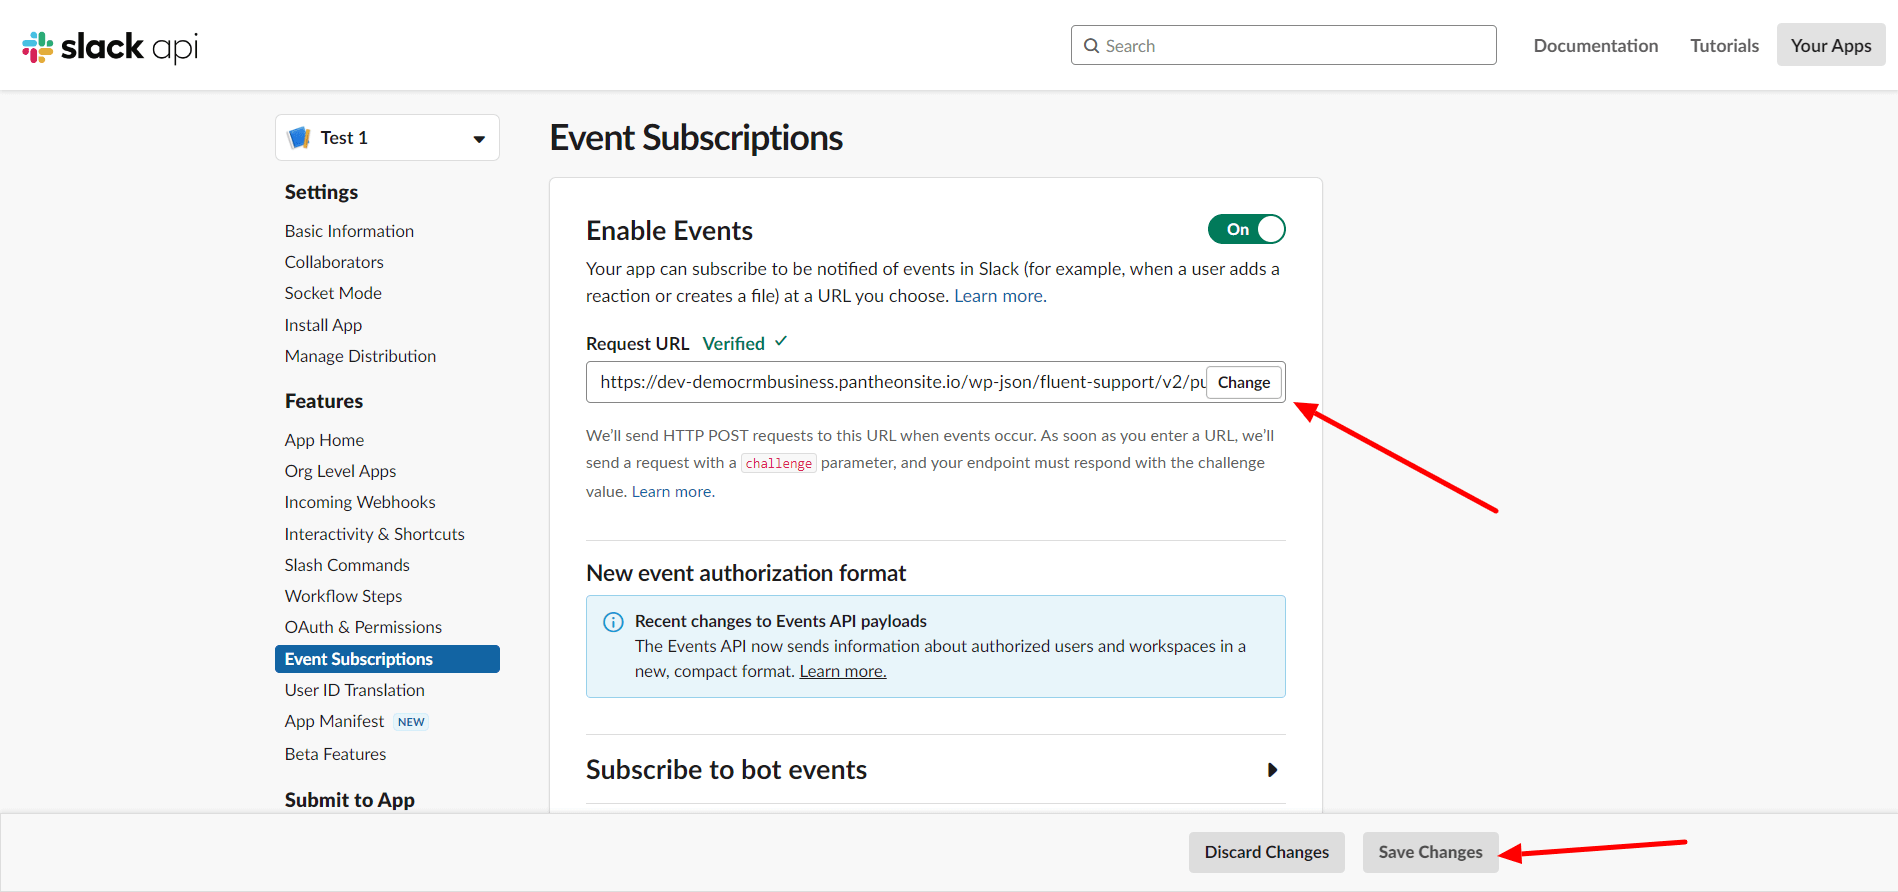 Enable Events - Slack API